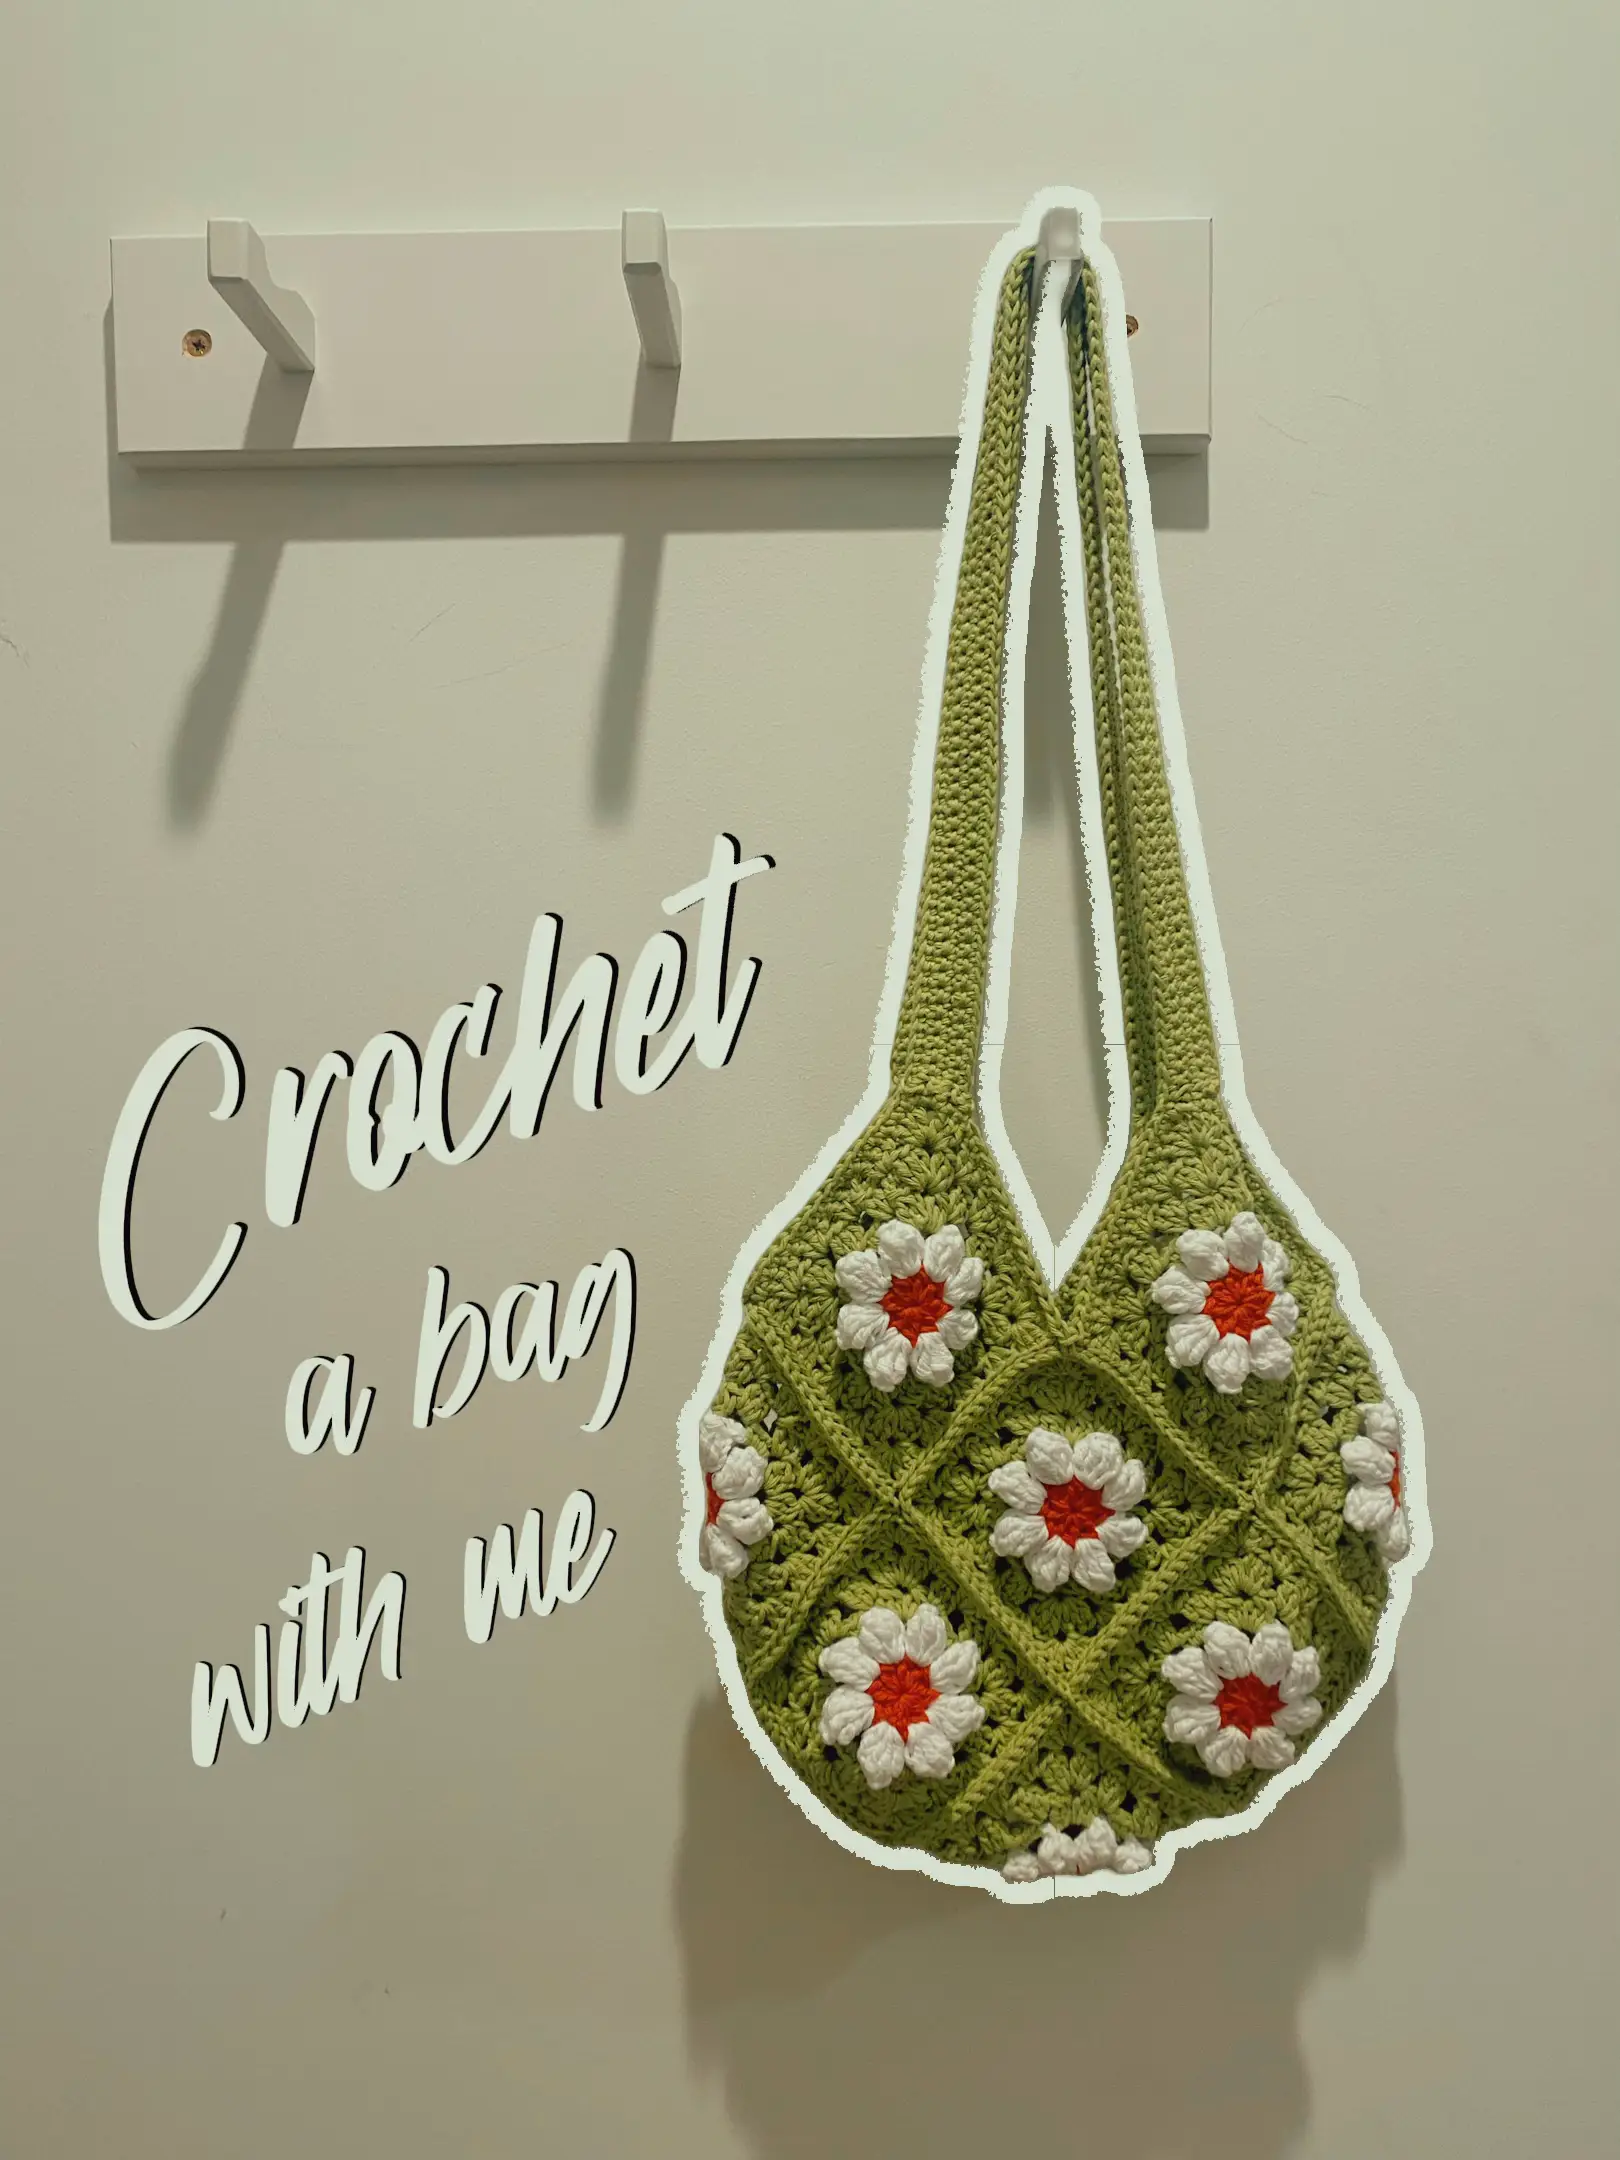 Some of my favourite amigurumi/ crochet books 📚 🧶🫶🏻 #fyp #crochet